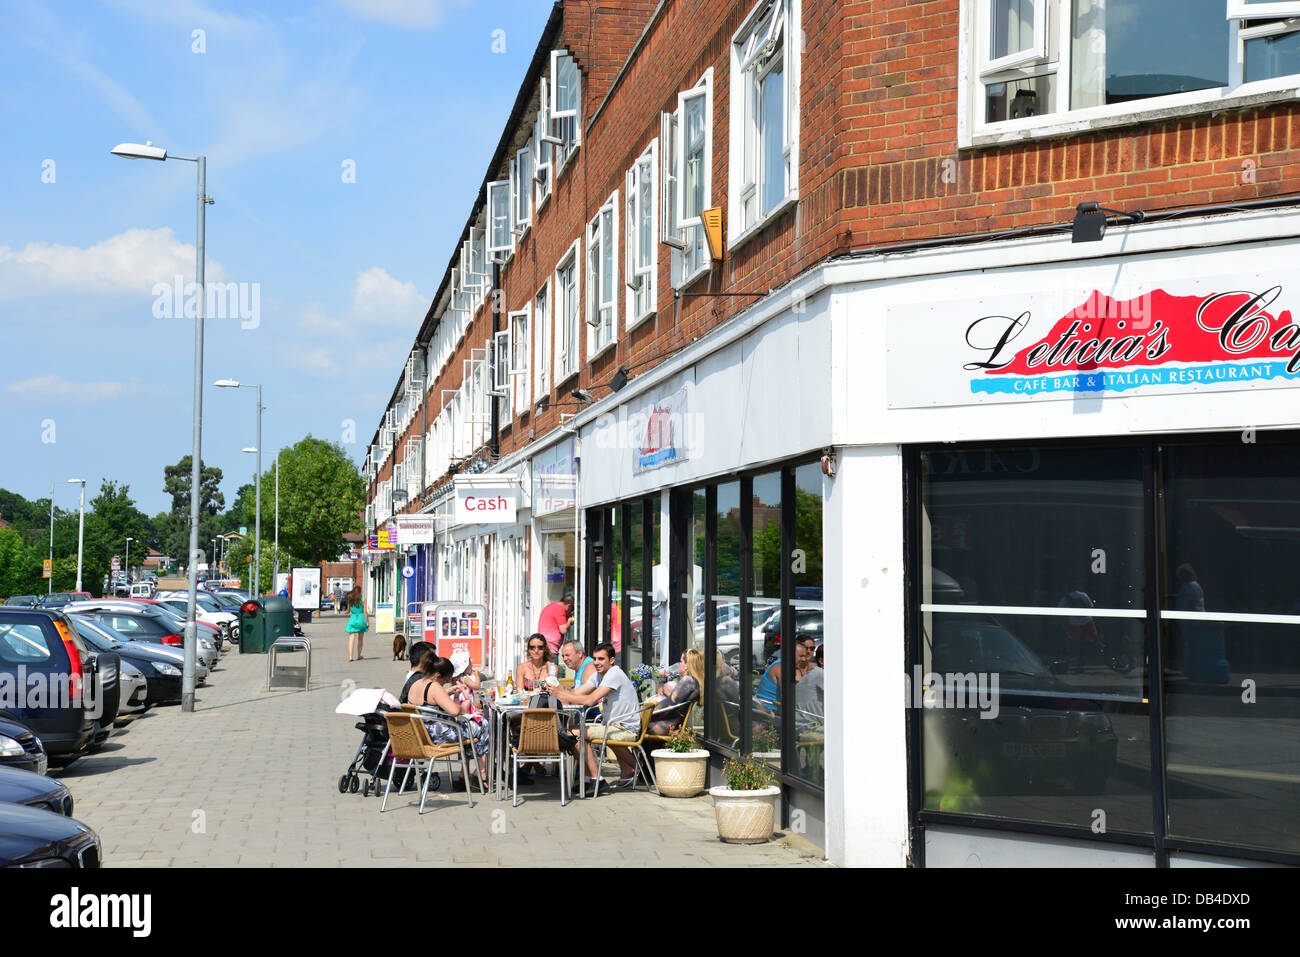 Leticia Cafe, North Parade, Chessington, Royal Borough of Kingston upon Thames, Greater London, England, United Kingdom Stock Photo